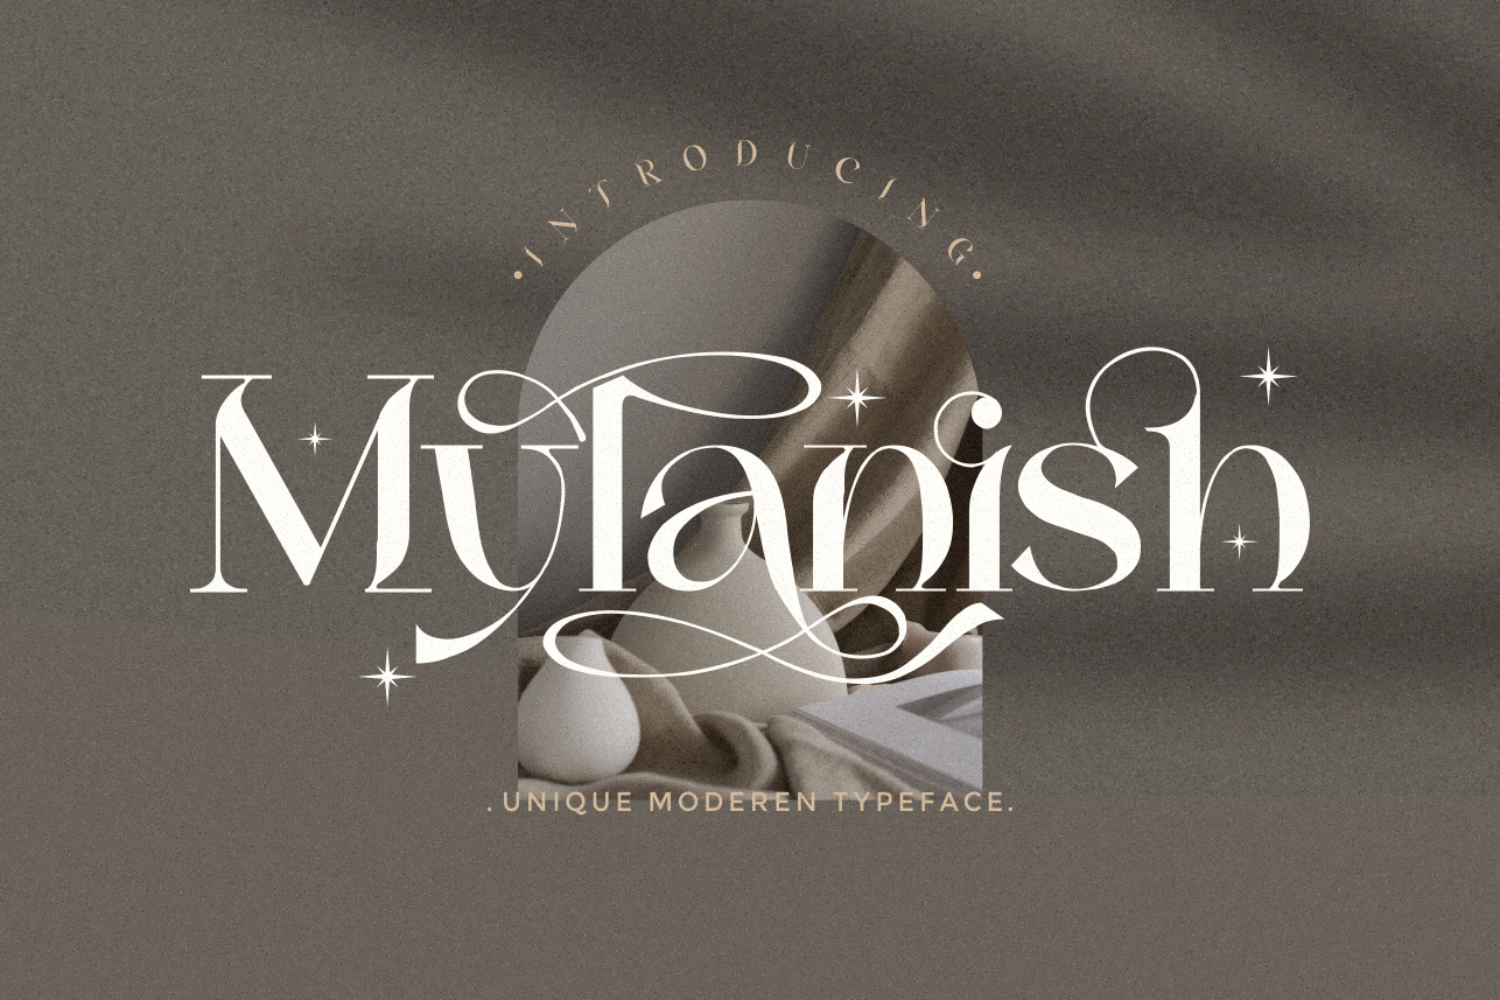 Mylanish Unique Modern Typeface Fonts